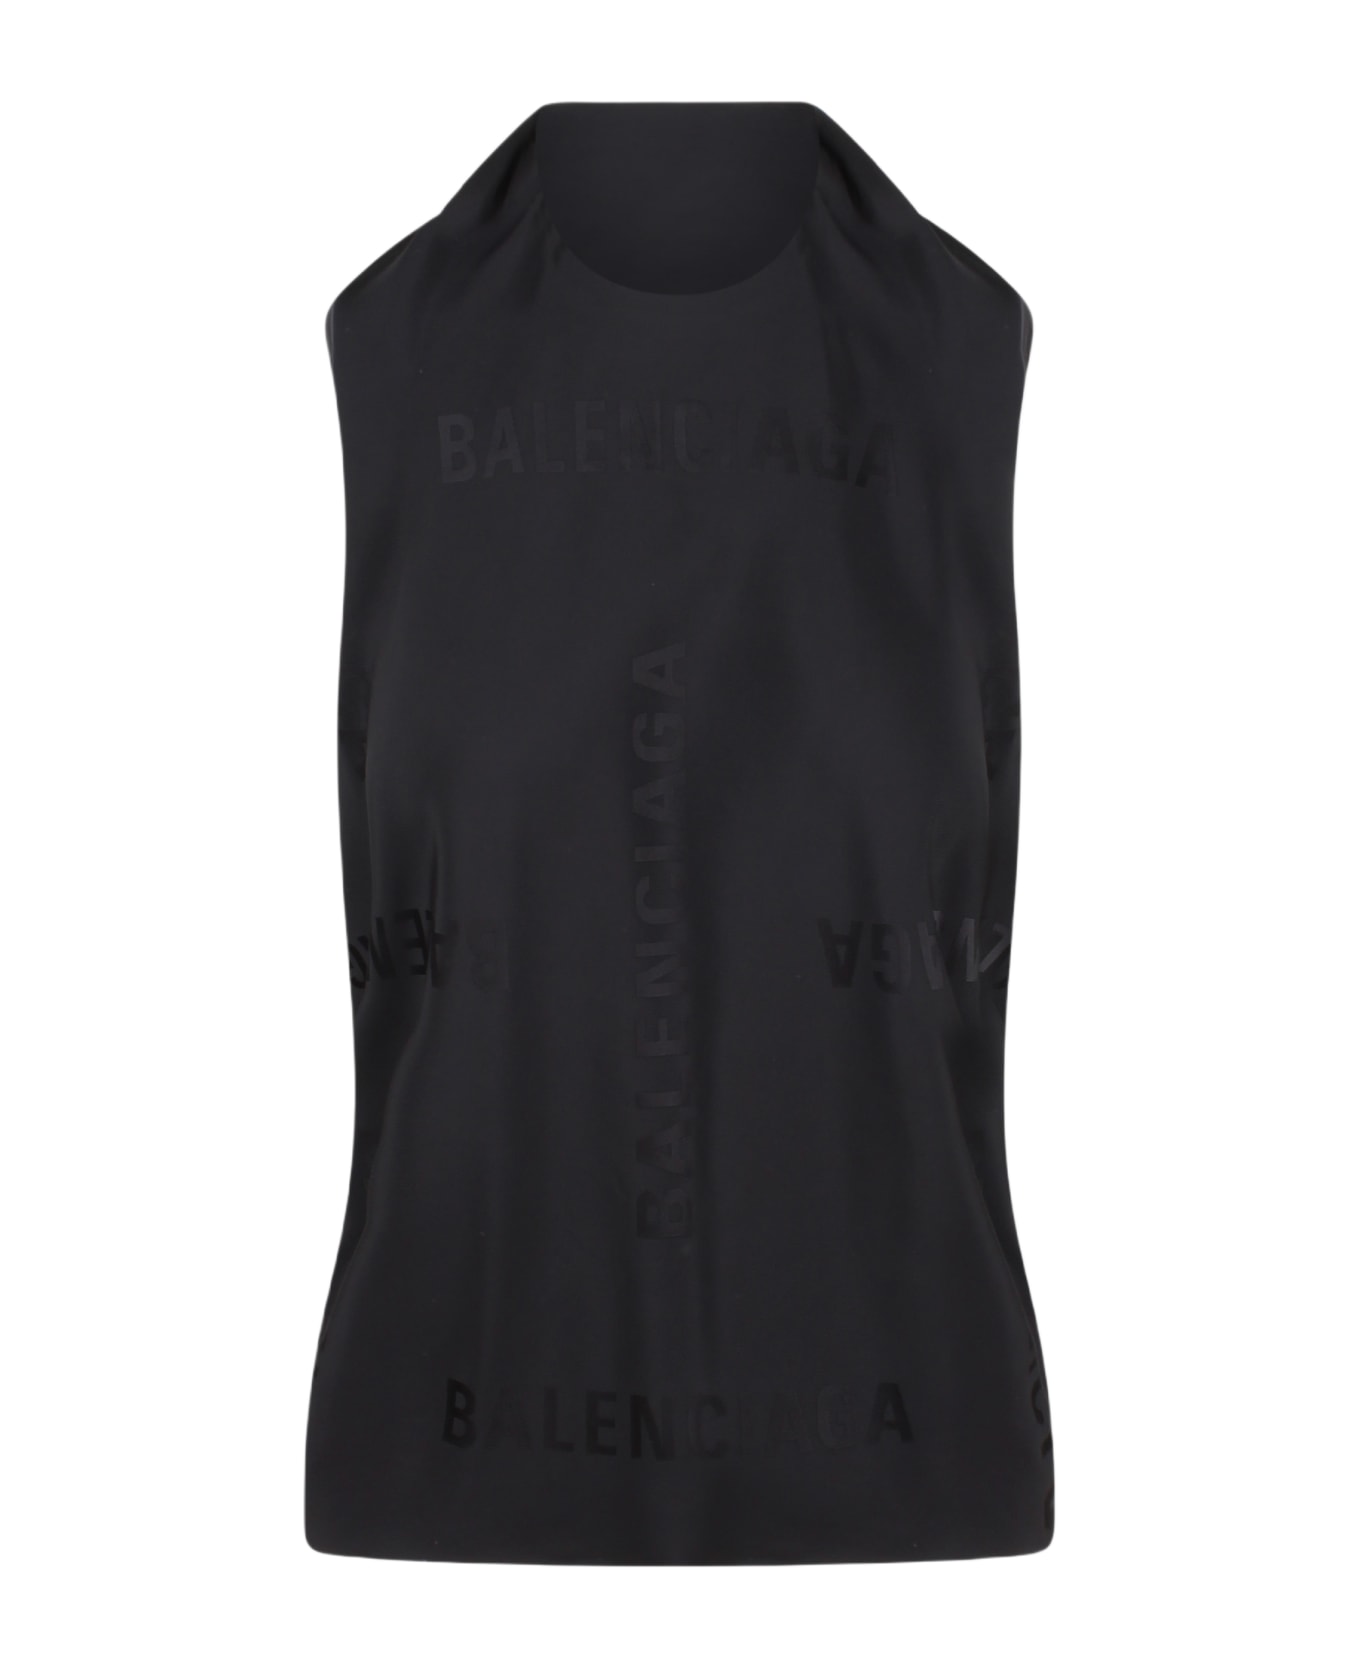 Balenciaga Knotted Top - Black トップス